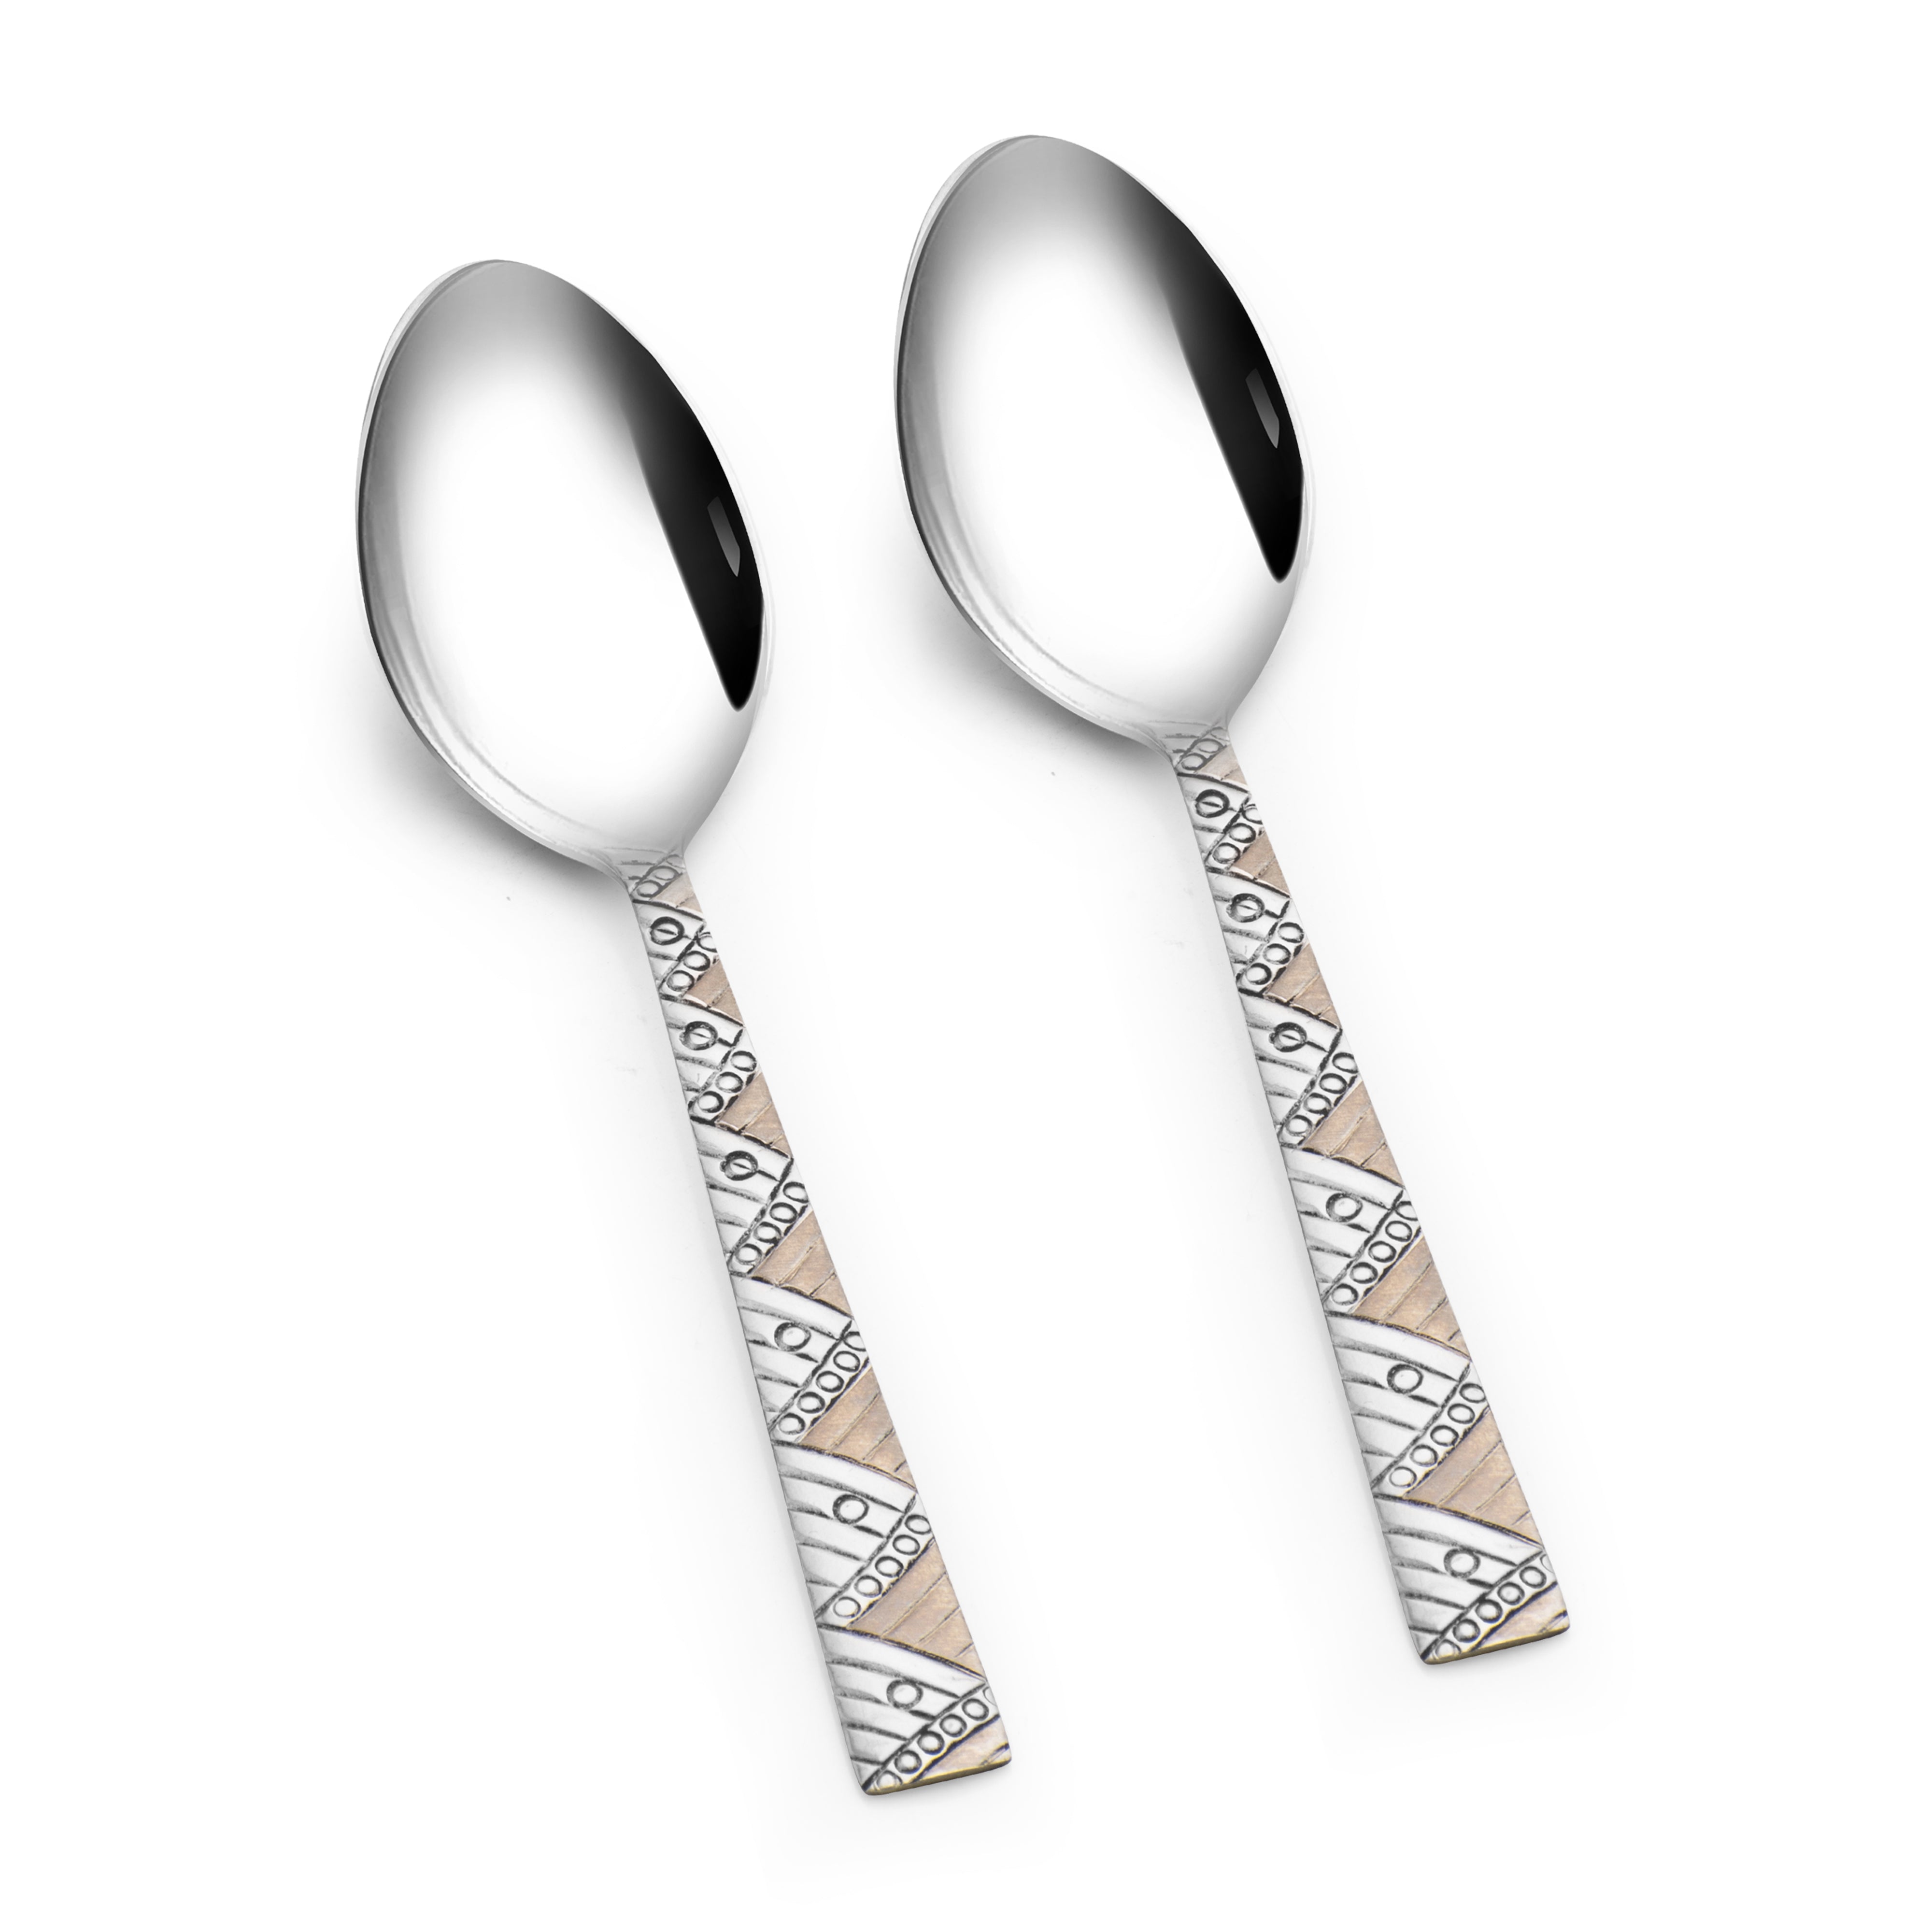 Arias by Lara Dutta Bloom Serving Spoon Set of 2 (Silver)